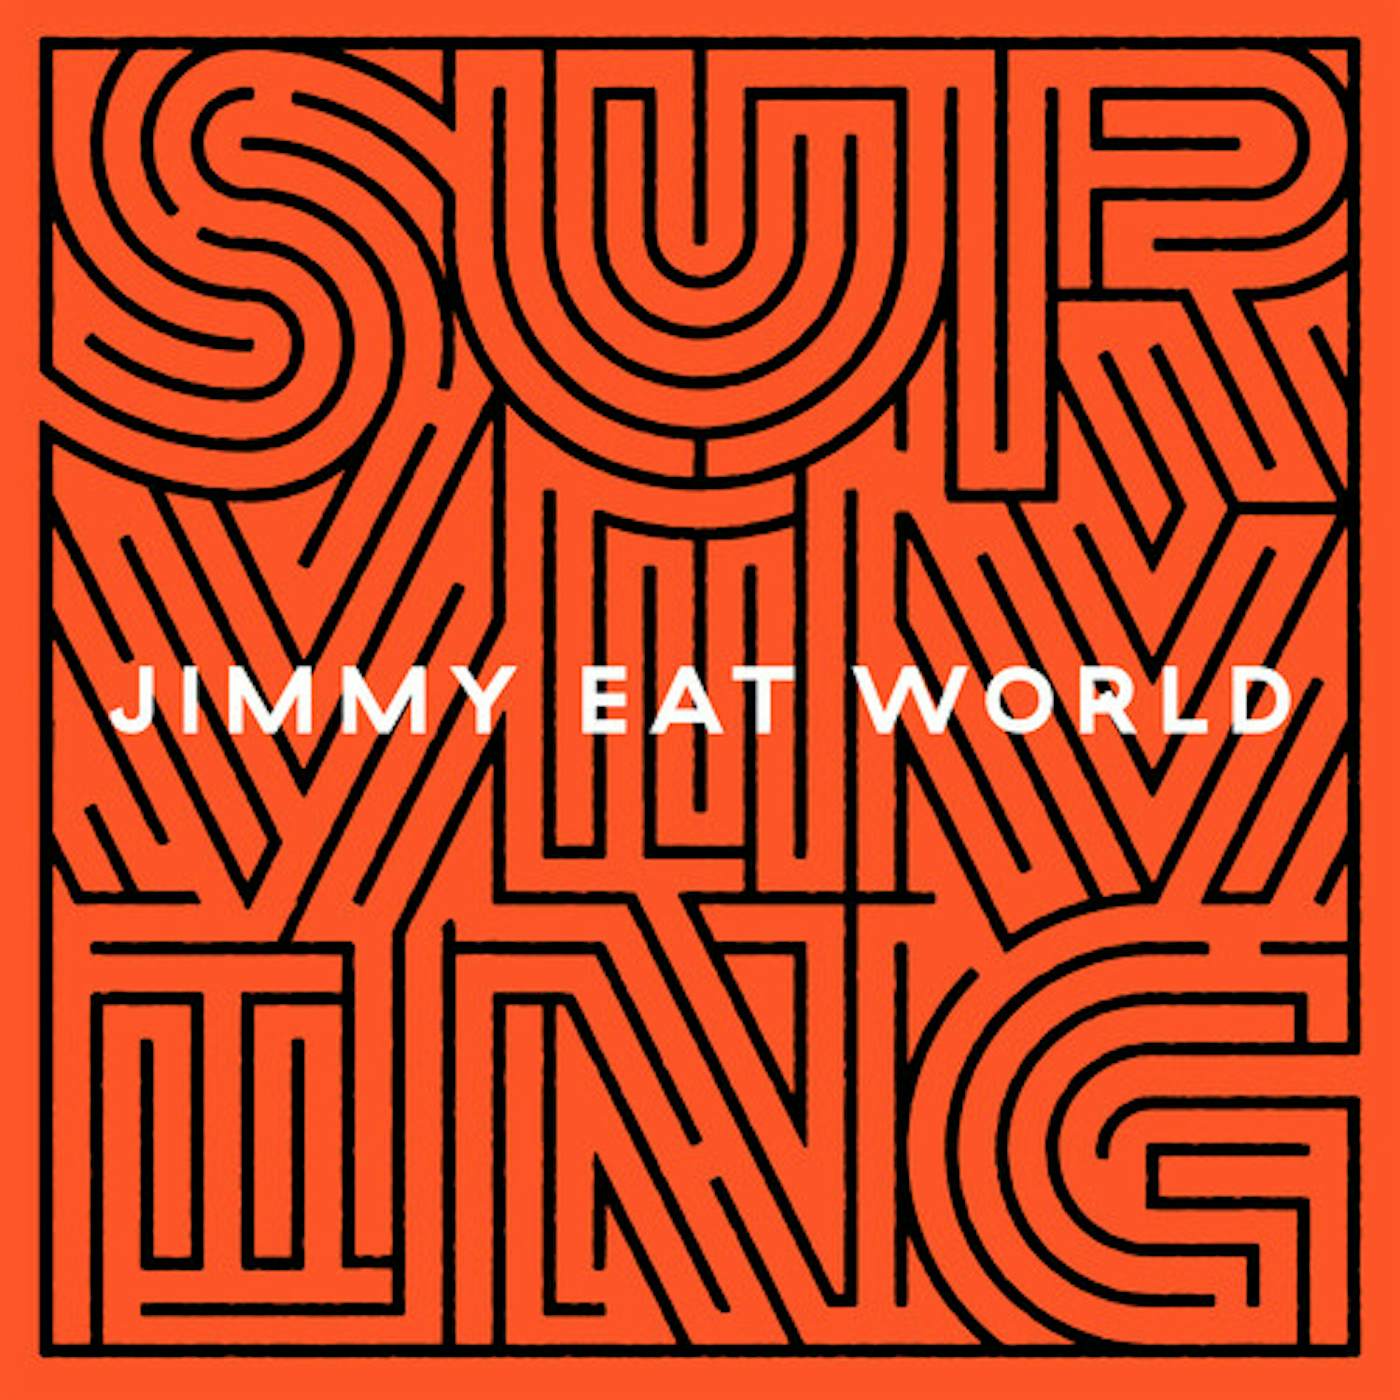 Jimmy Eat World Surviving Vinyl Record